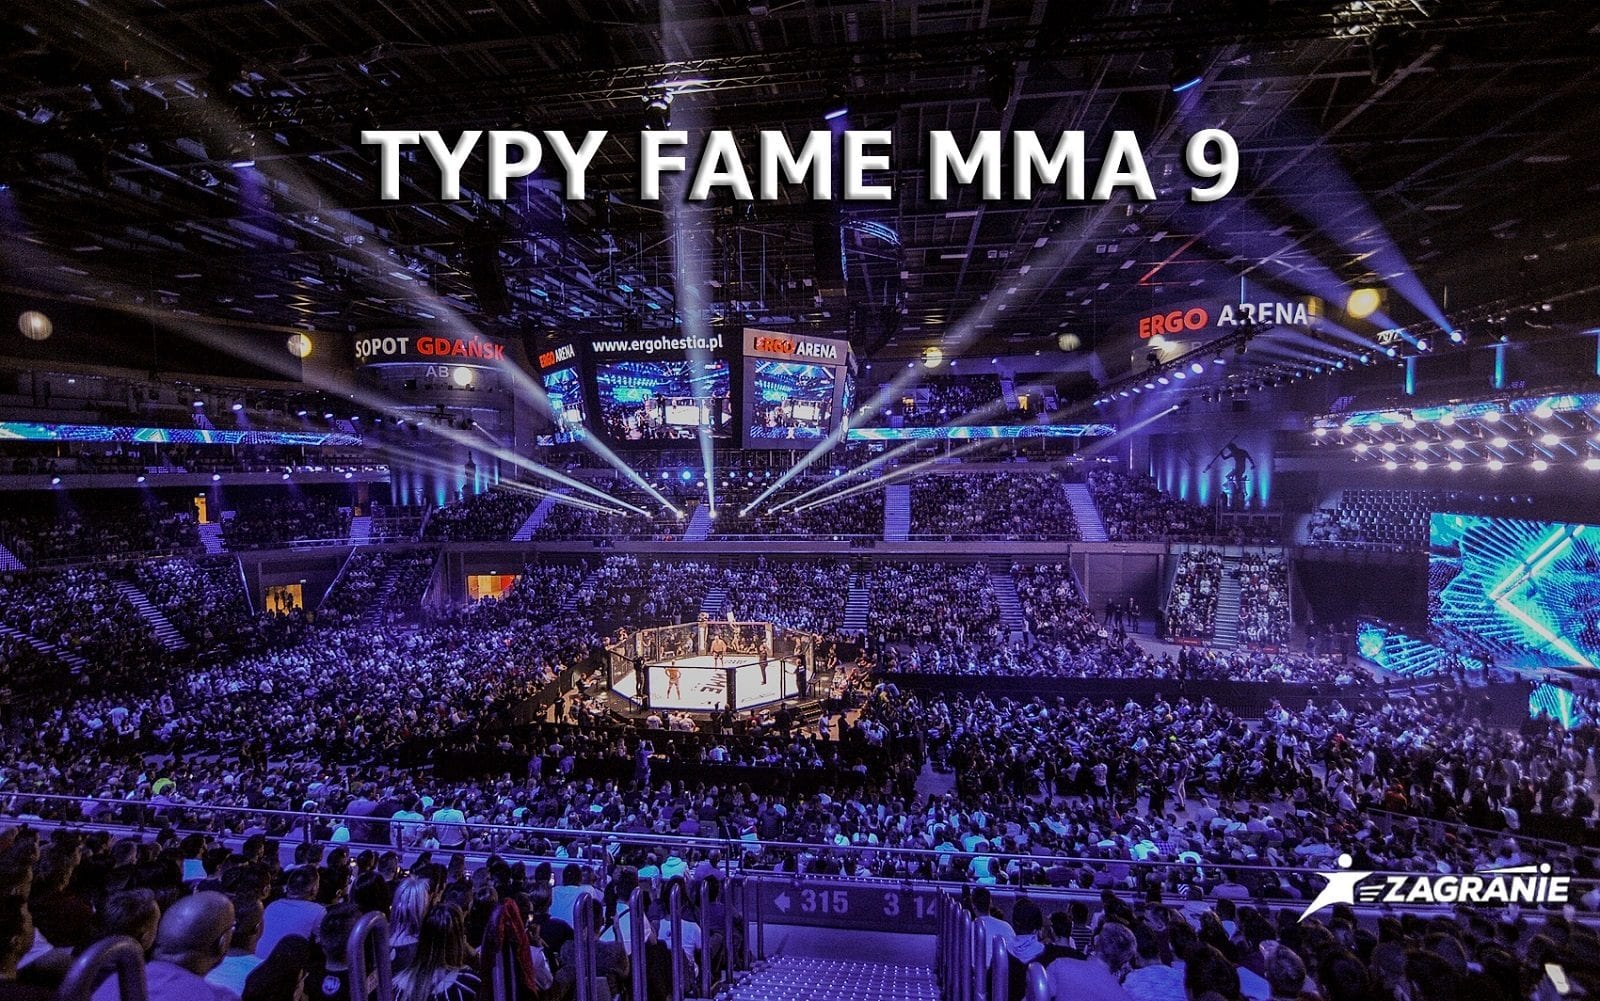 FAME MMA 9 typy